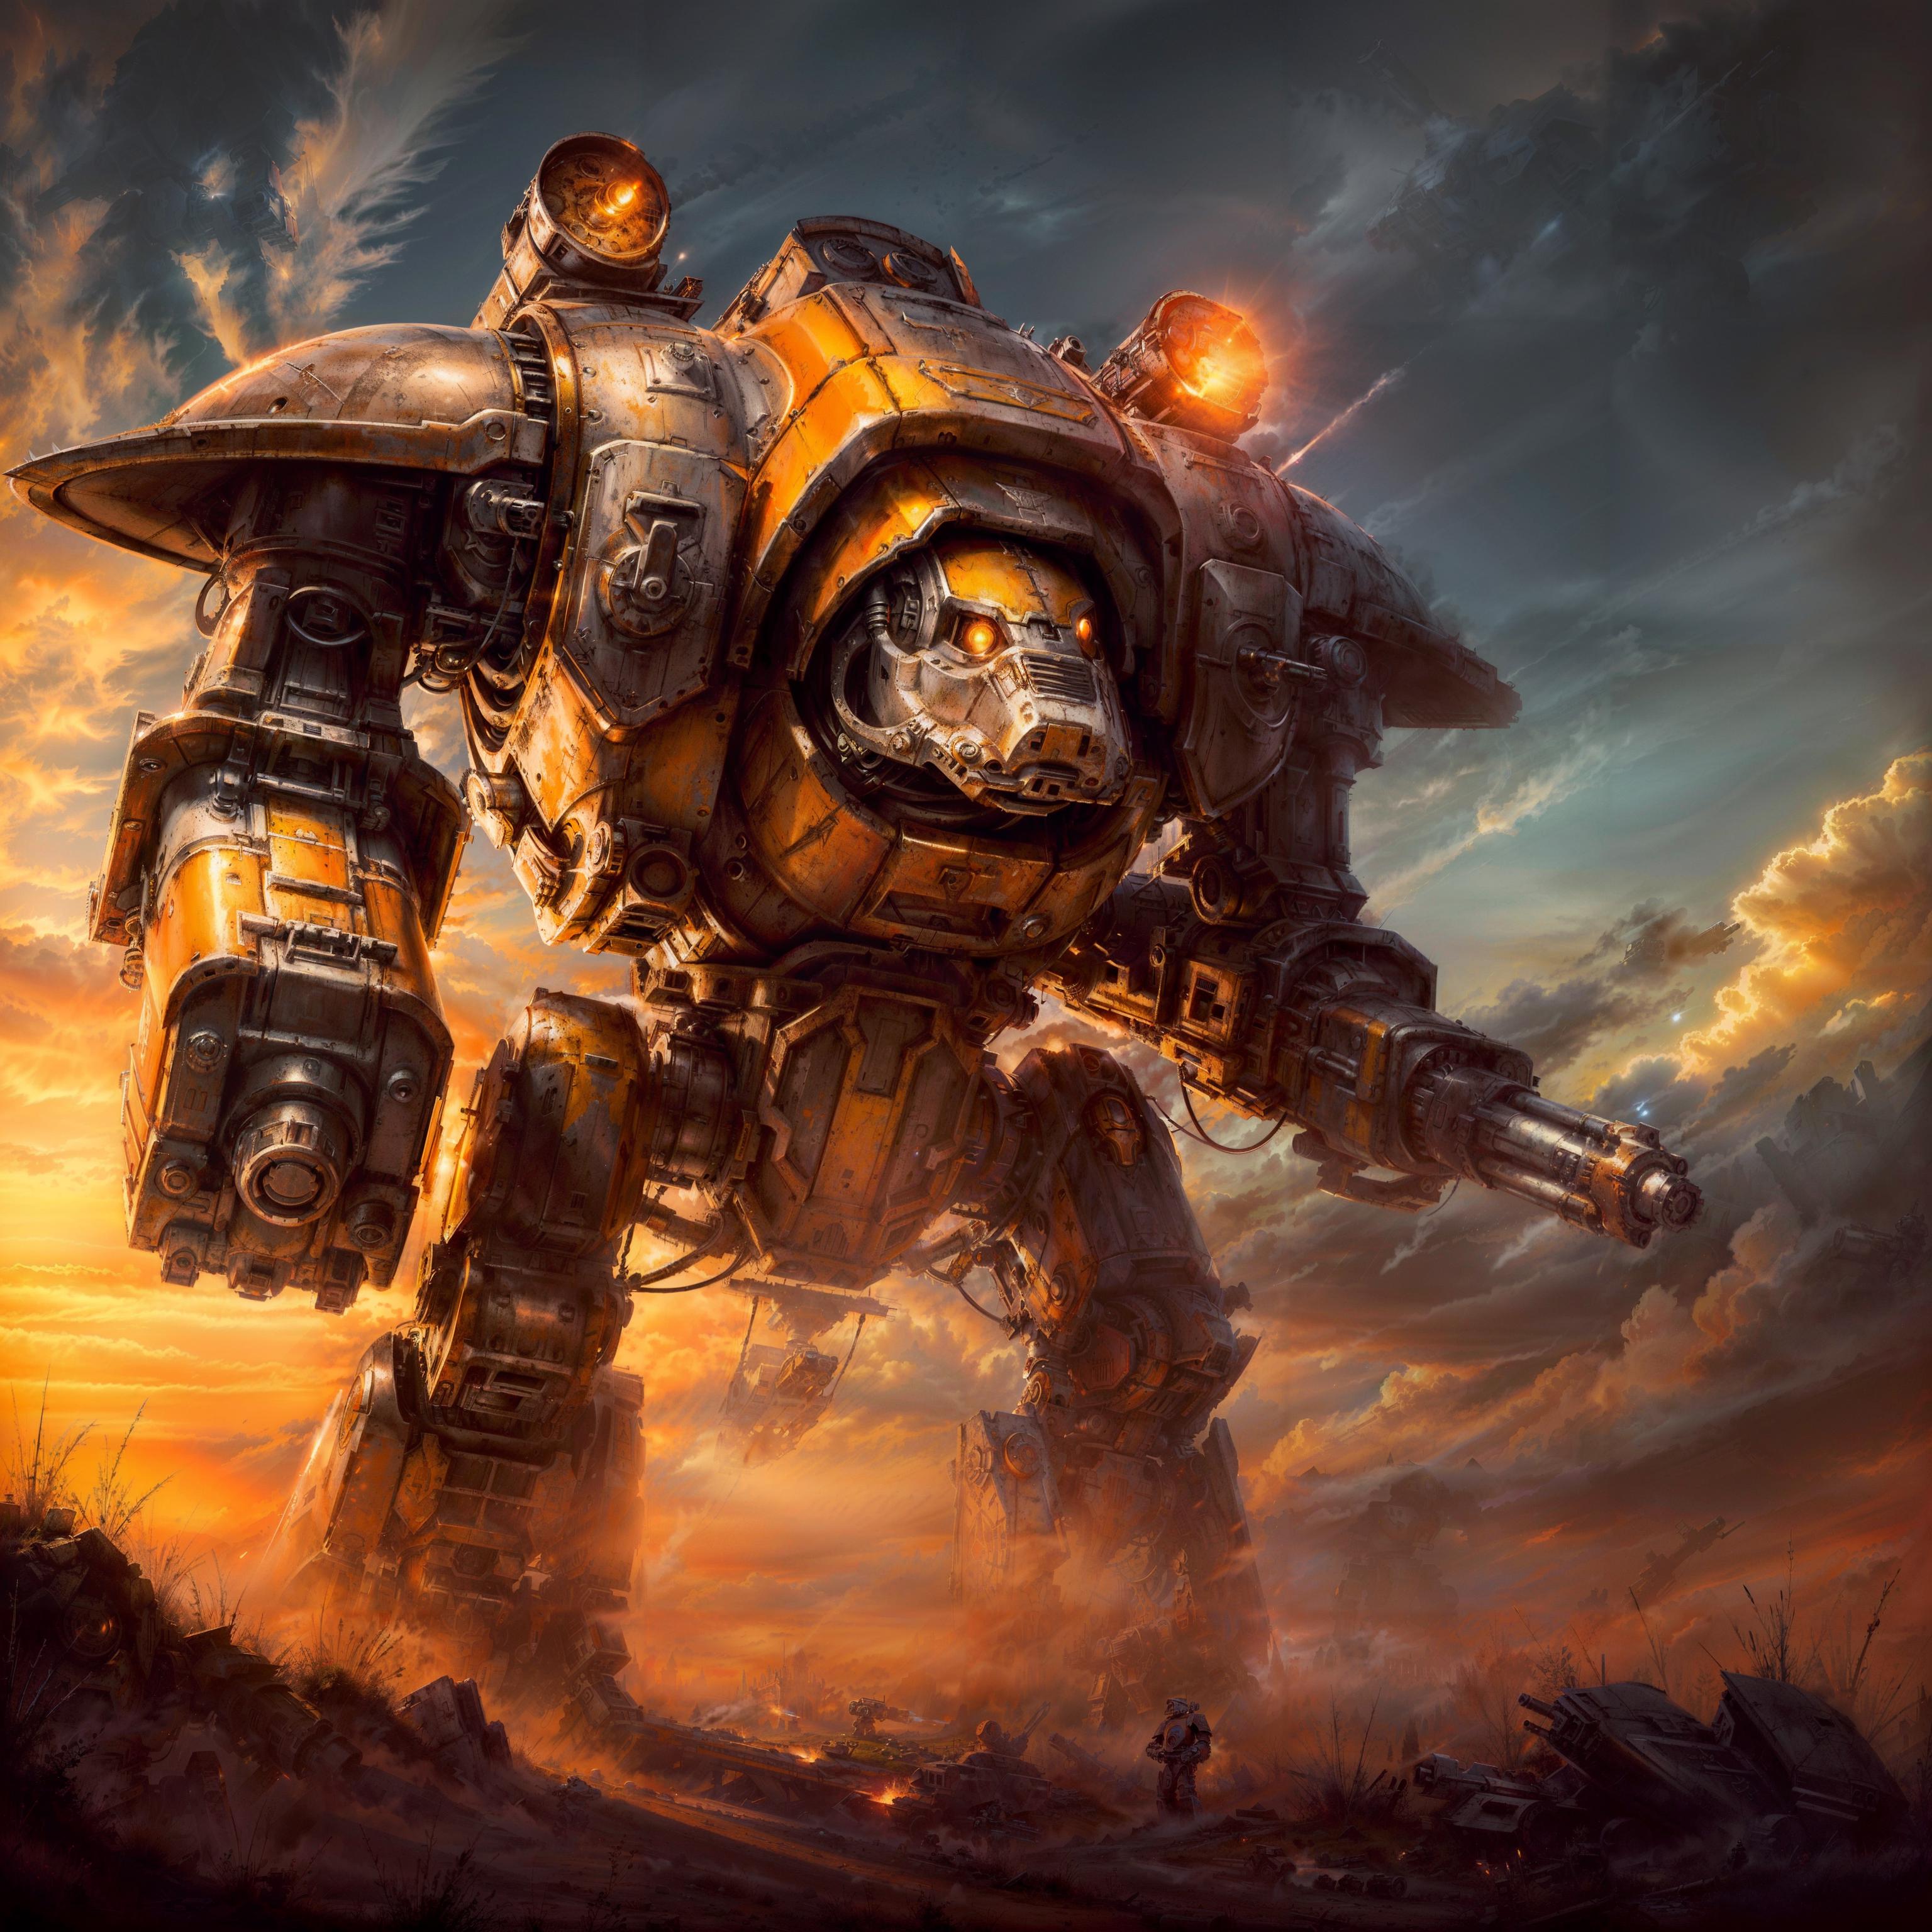 Titan, God-Machine image by Geekyzilla